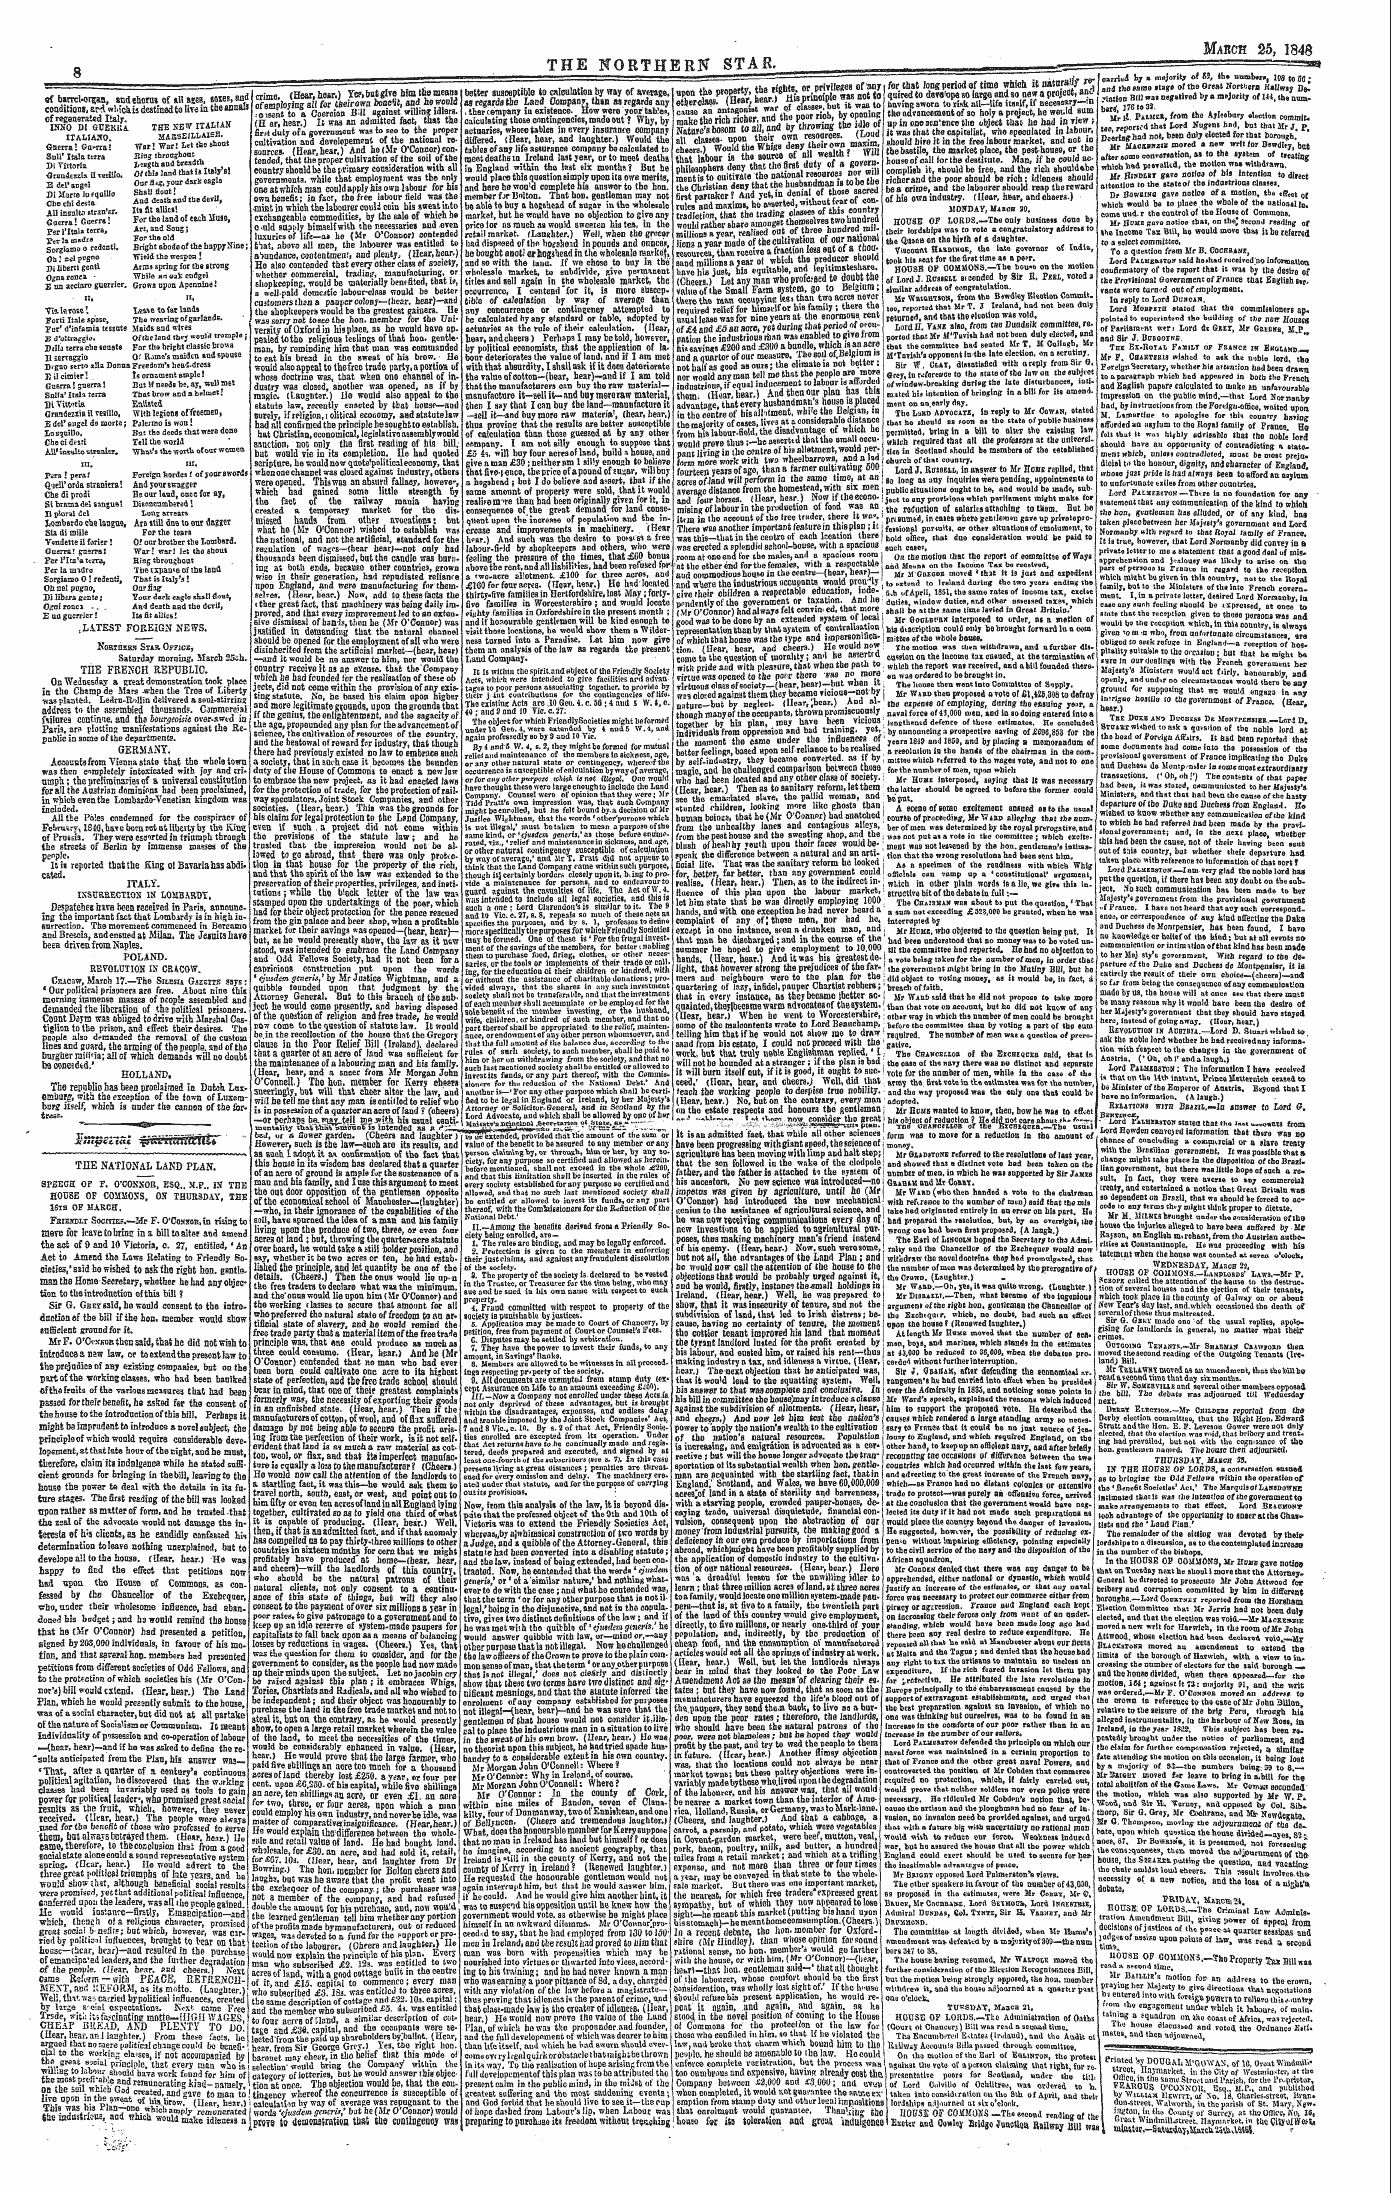 Northern Star (1837-1852): jS F Y, 3rd edition - Sstgzi-Ctii Jw-Avawuil'wvt